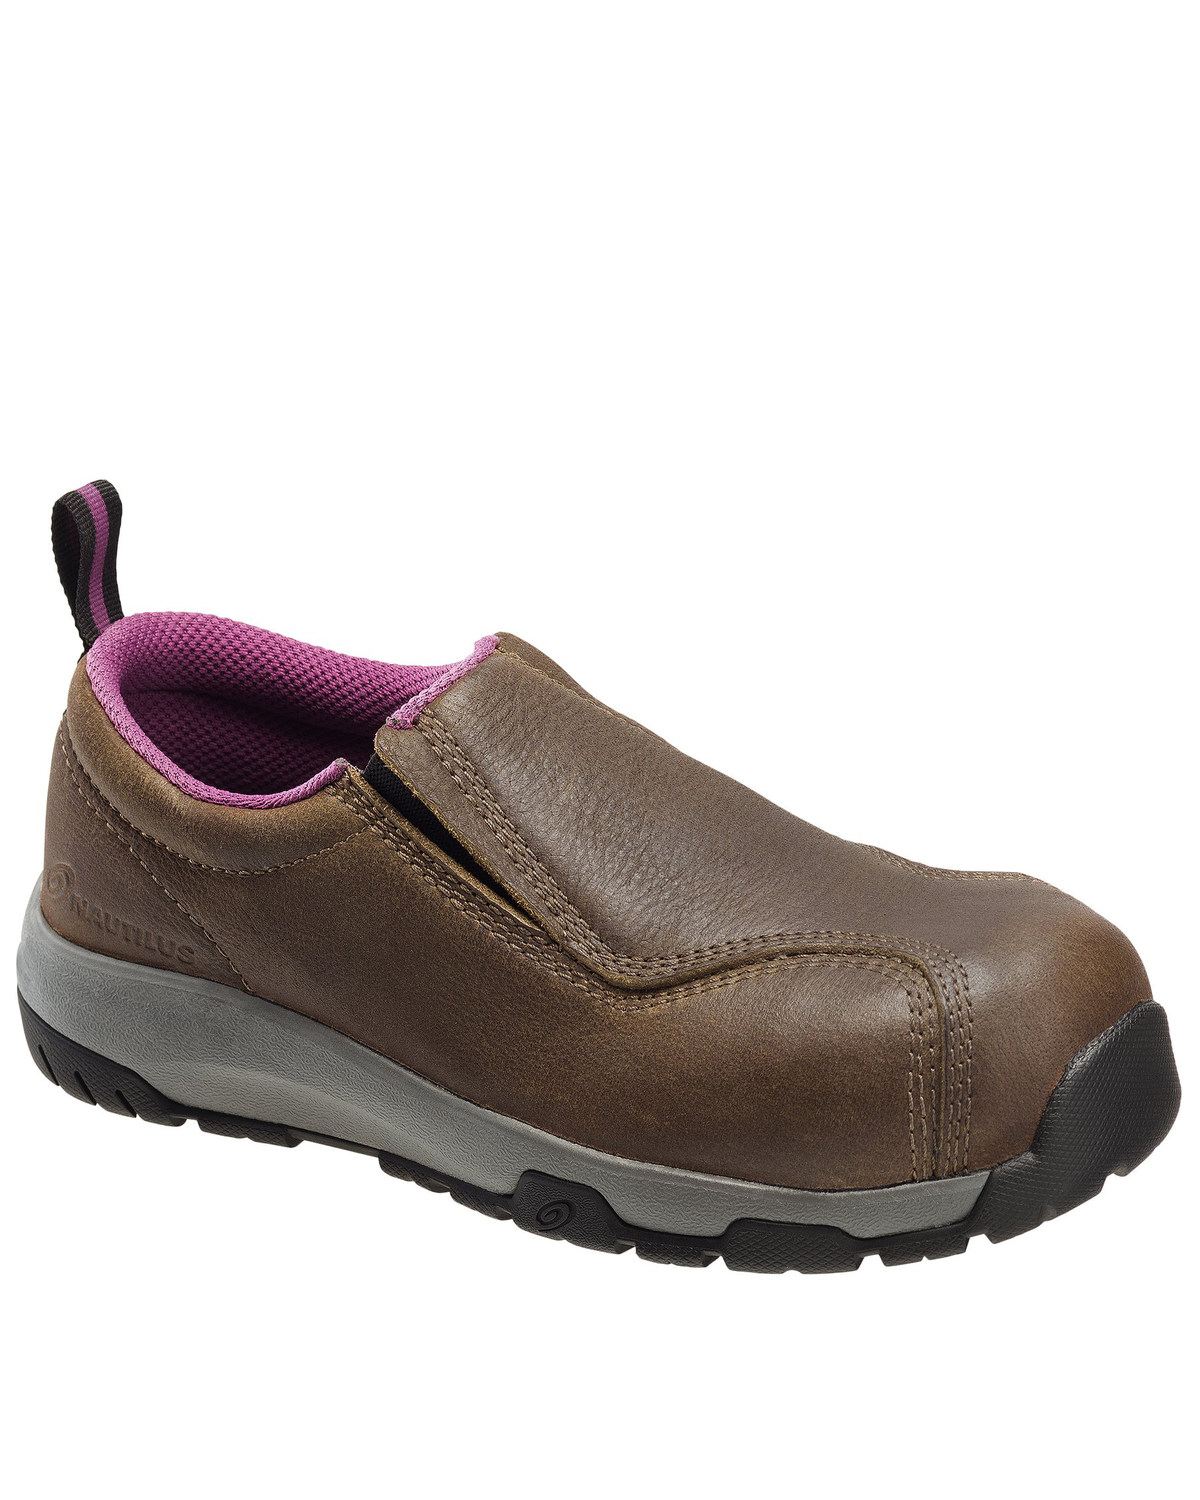 Nautilus Women's Slip-On Work Shoes - Composite Toe